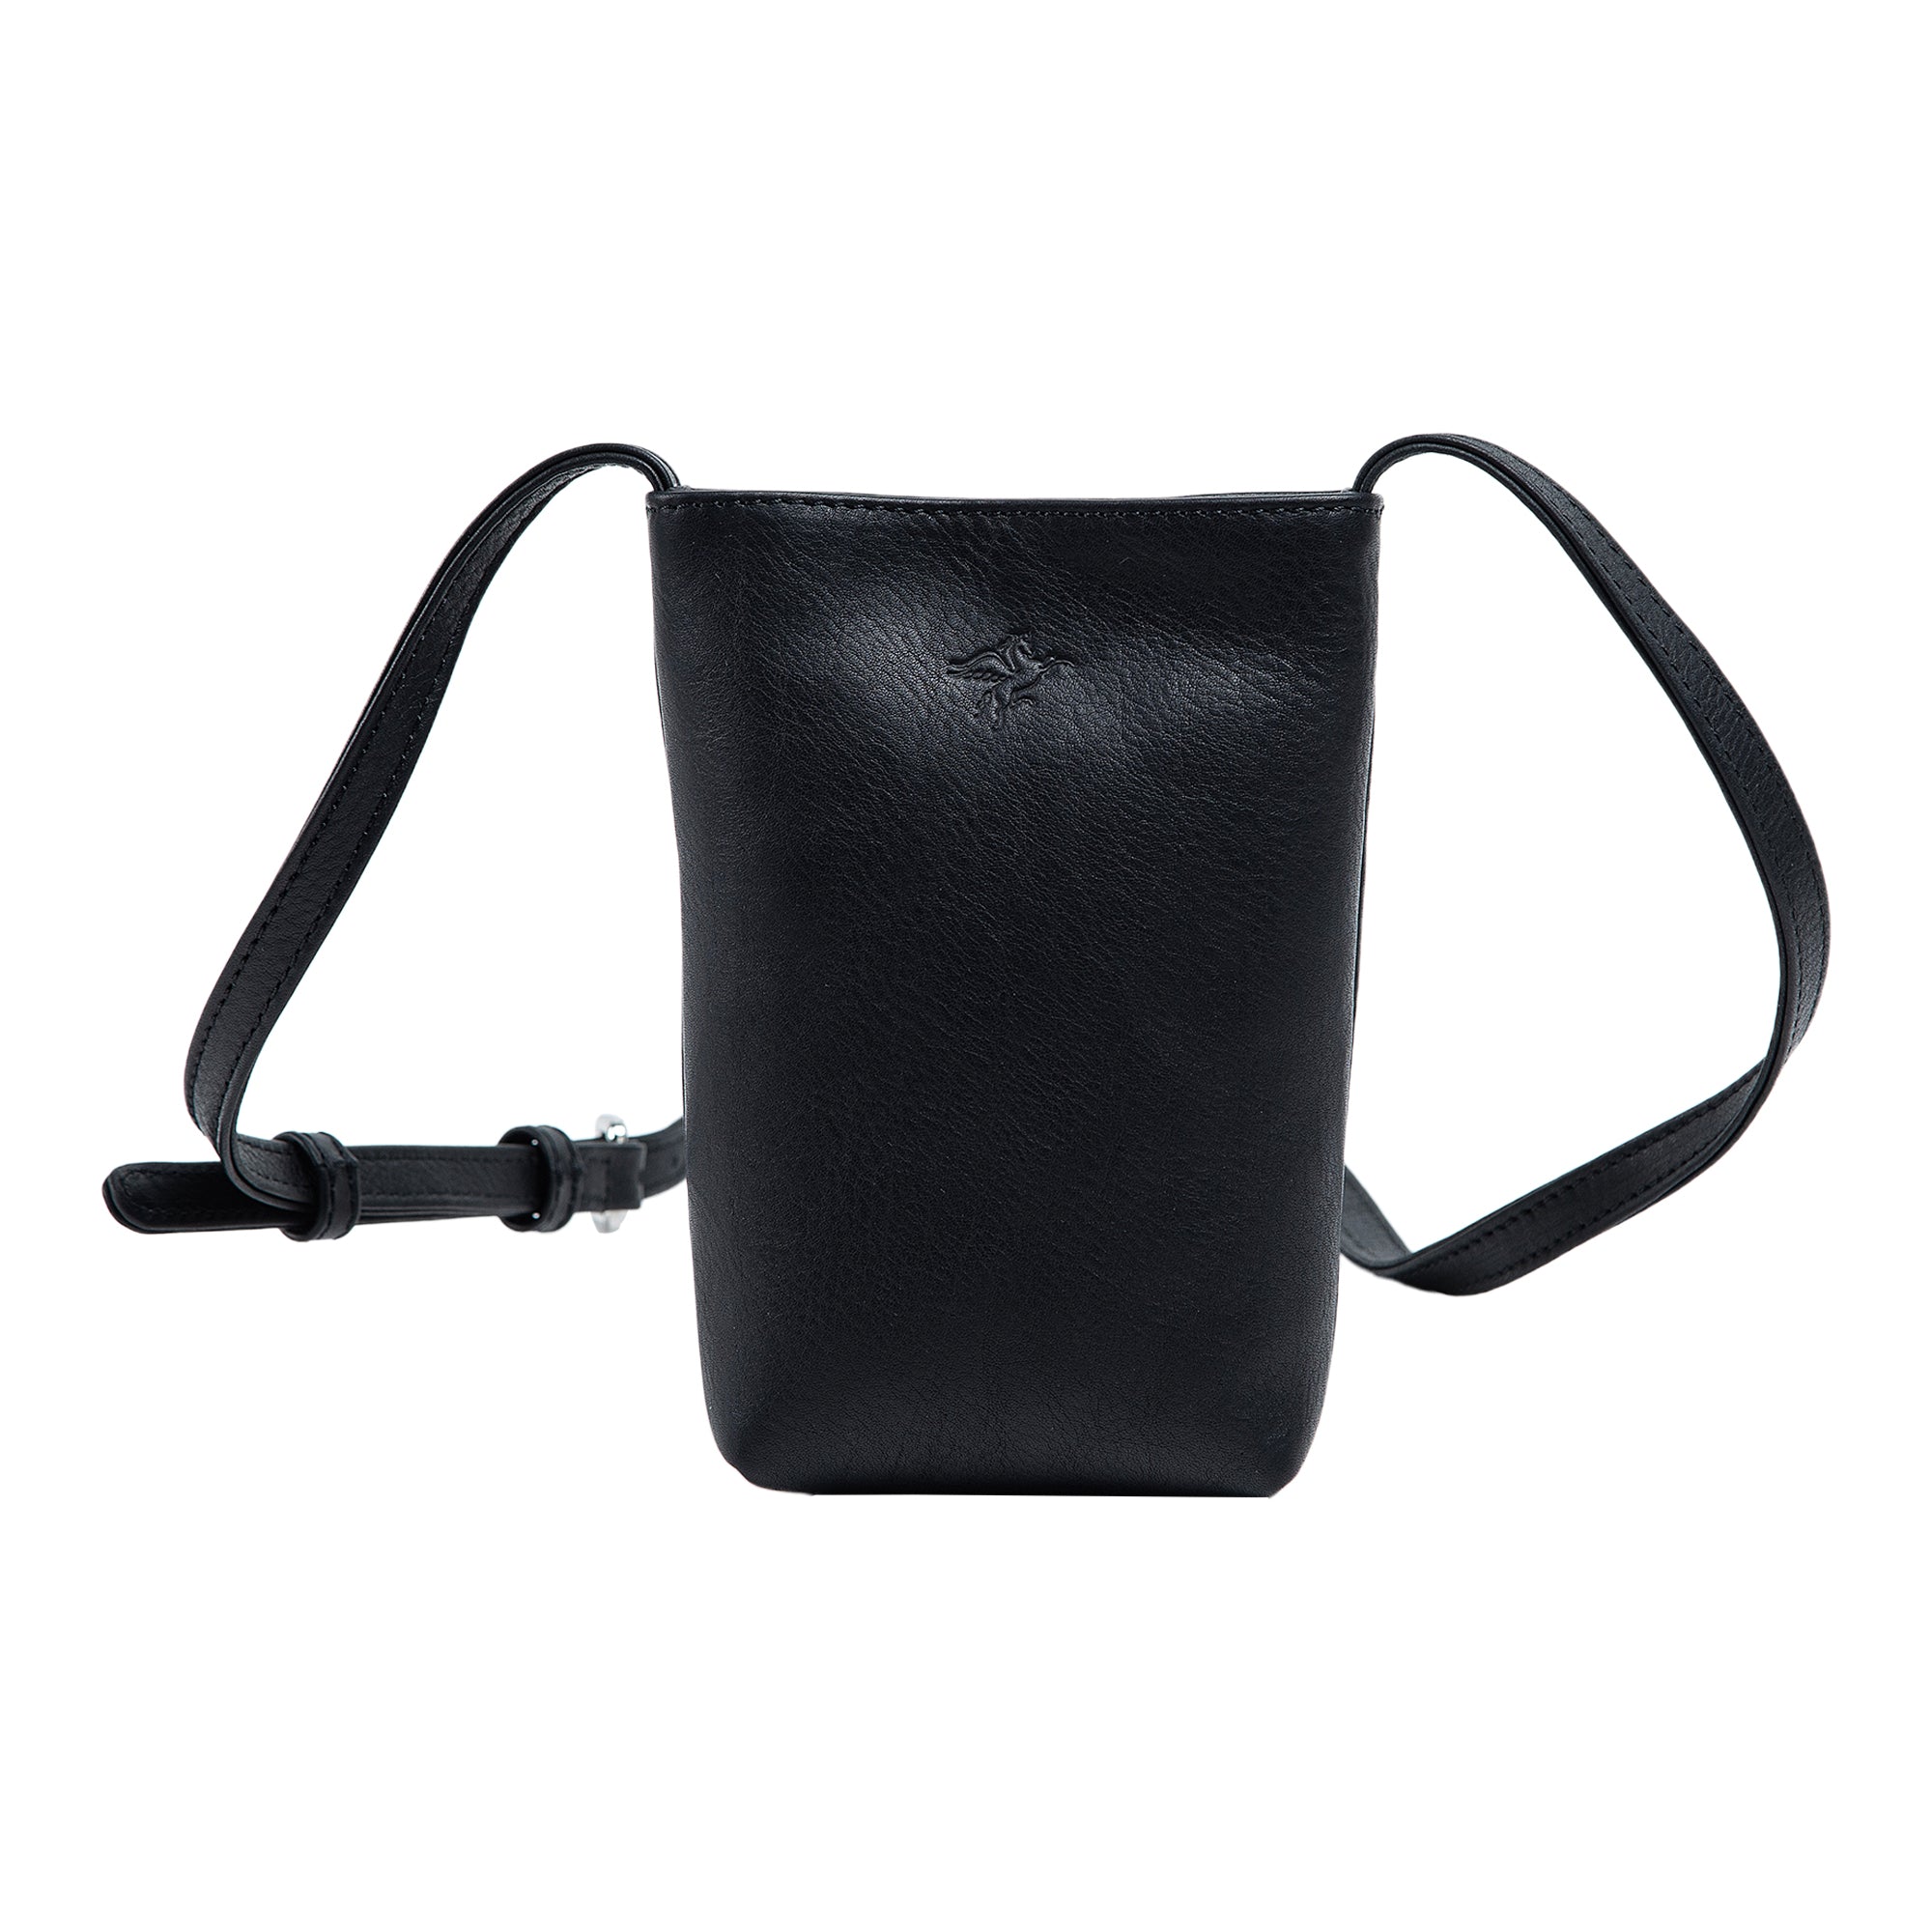 Designer Woman Shoulder Bag Women Bags Handbags Purse Metal Chain Ladies  Fashion Wholesale Promotional From Uniway01, $51.99 | DHgate.Com